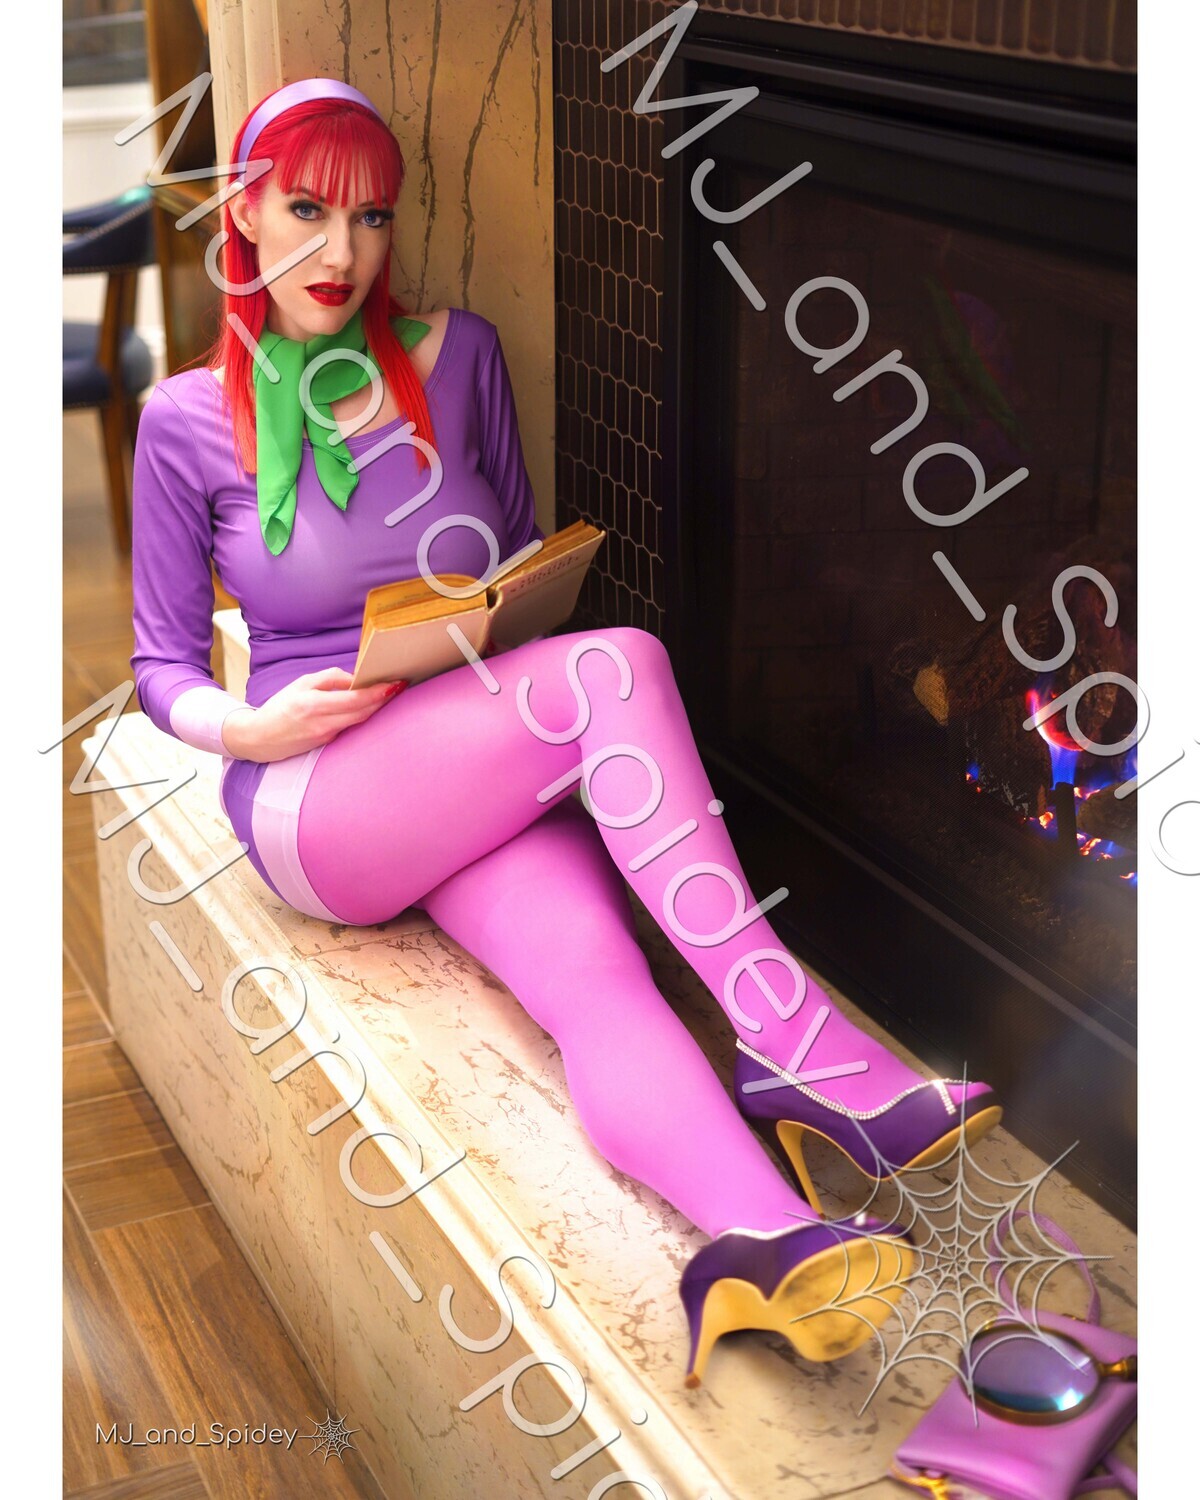 Scooby Doo - Mary Jane Watson - Daphne Blake 2 - Cosplay Print (Cartoons, Velma, Stockings, Heels)